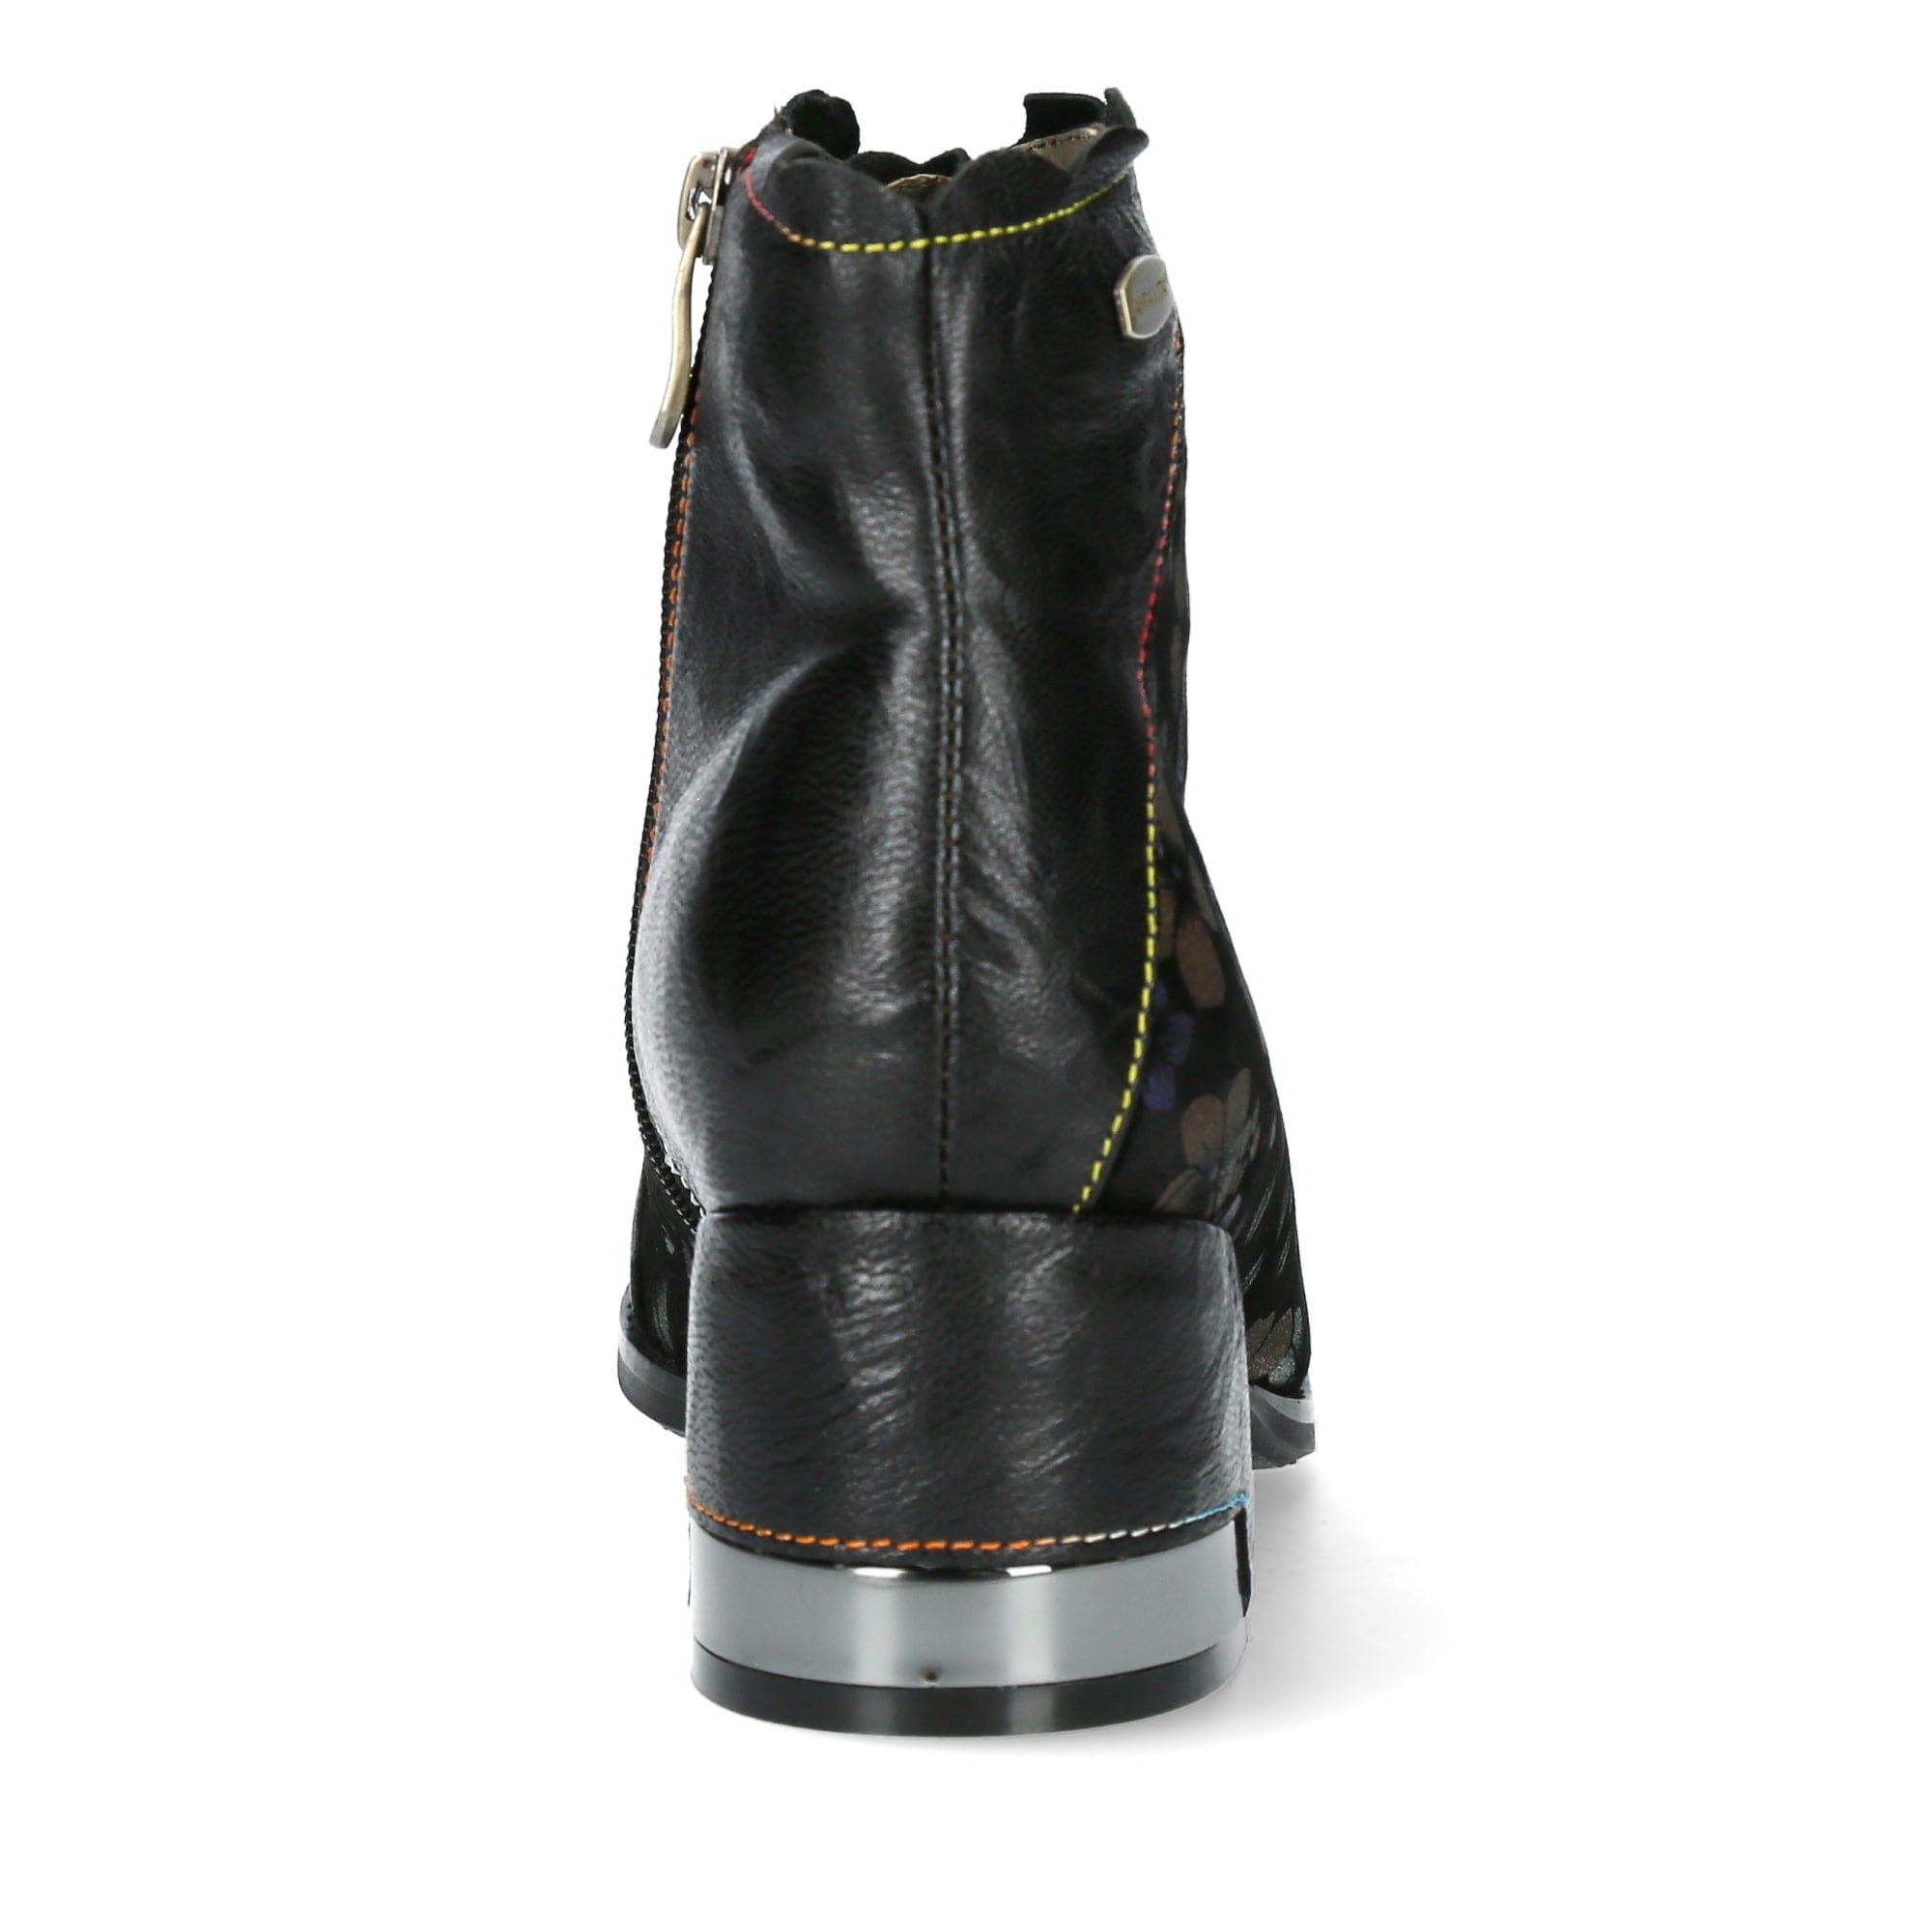 GYCROO 11 shoe - Boots